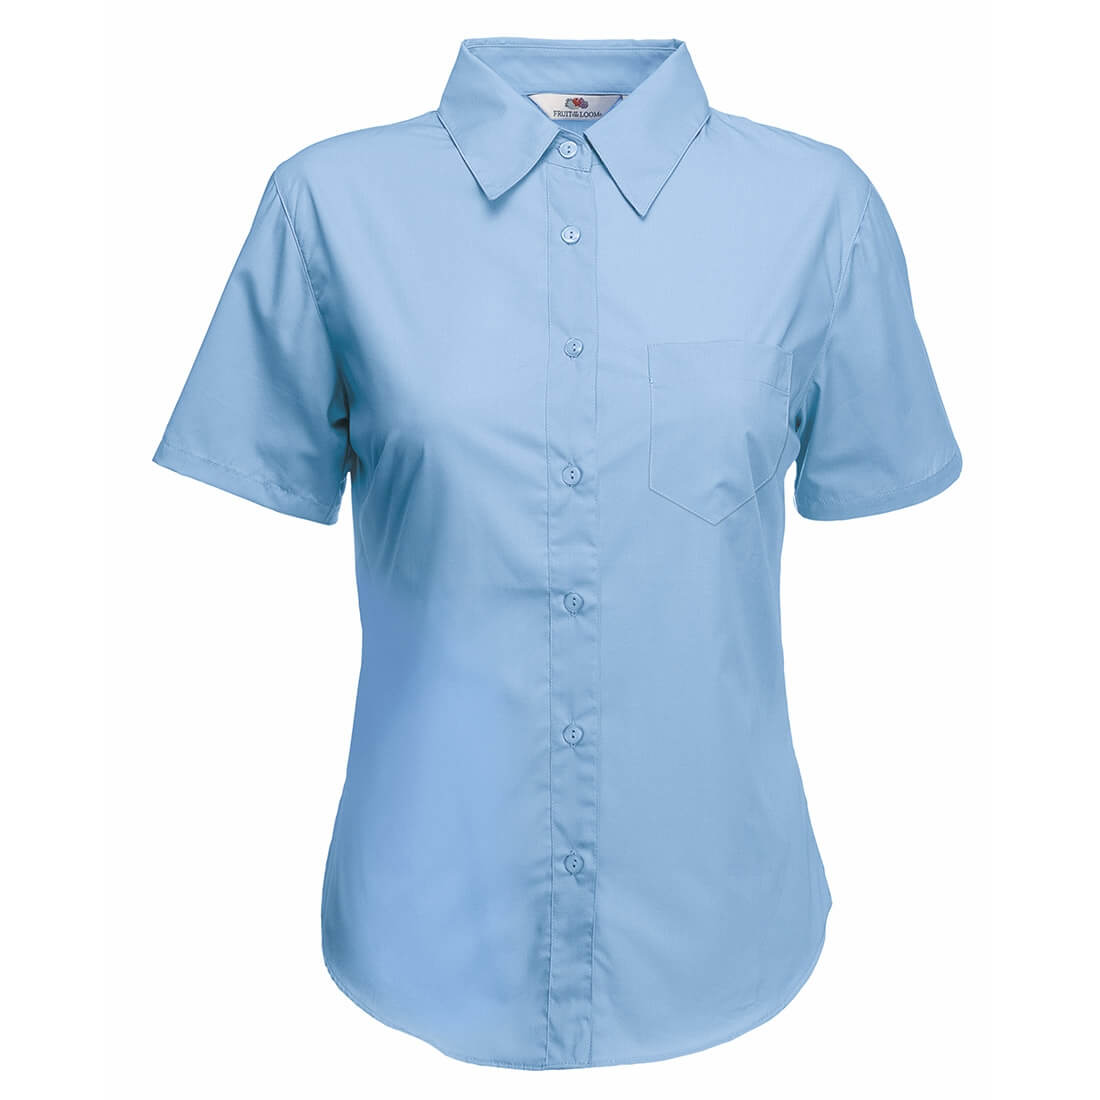 Lady-Fit Short Sleeve Poplin Shirt - Safetywear